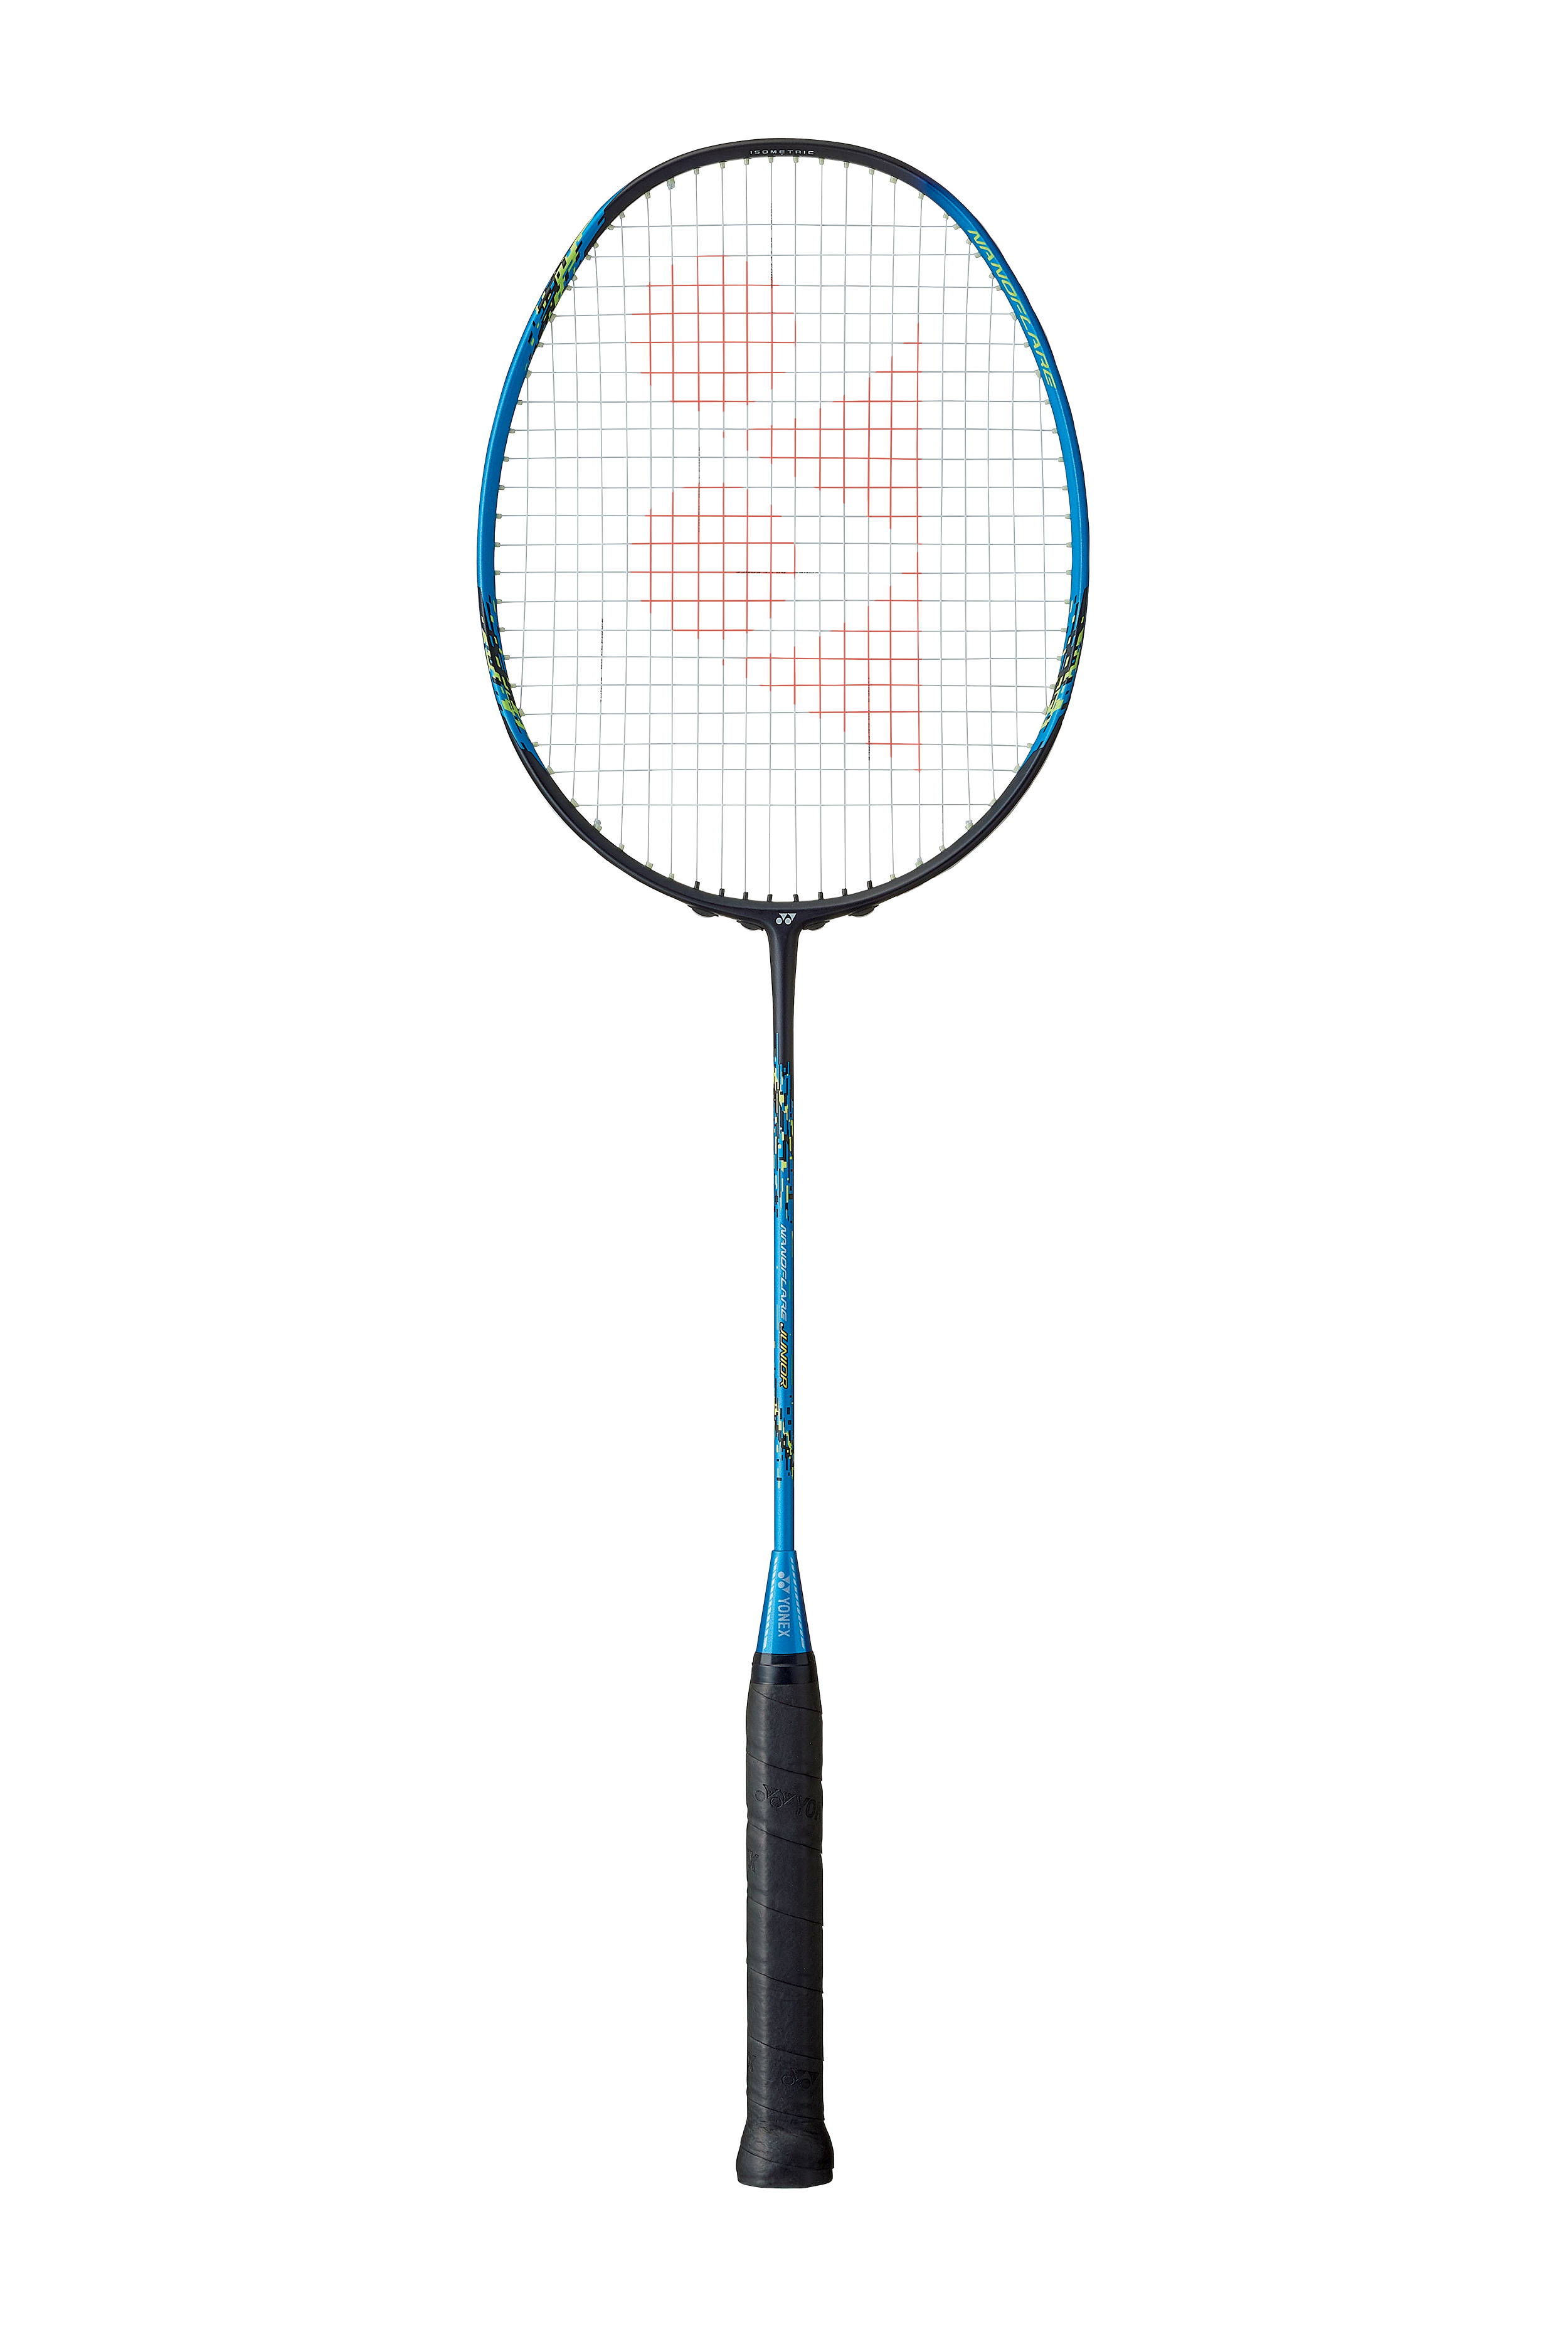 Yonex Nanoflare Junior Badminton Racquet NF-JR - Strung - 4UG7 - Cyan